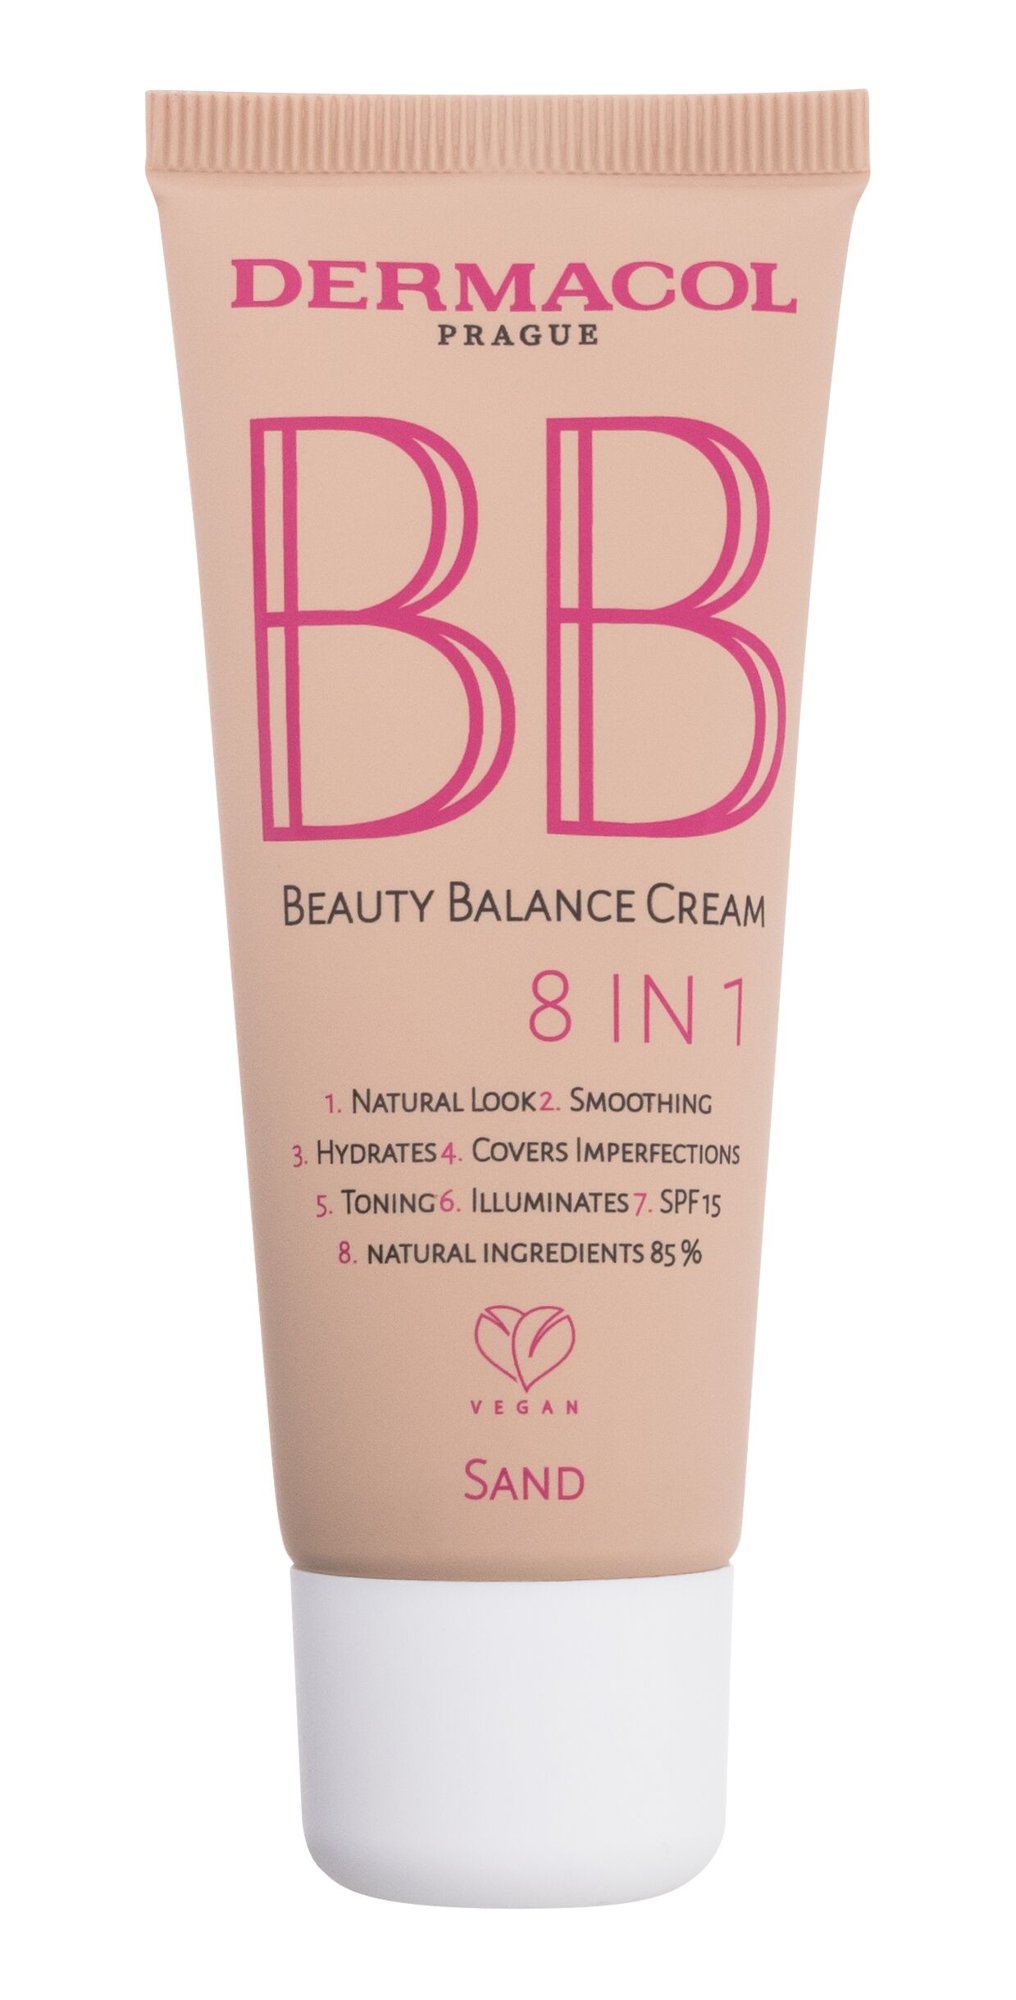 Dermacol BB Beauty Balance Cream 8 IN 1 BB kremas